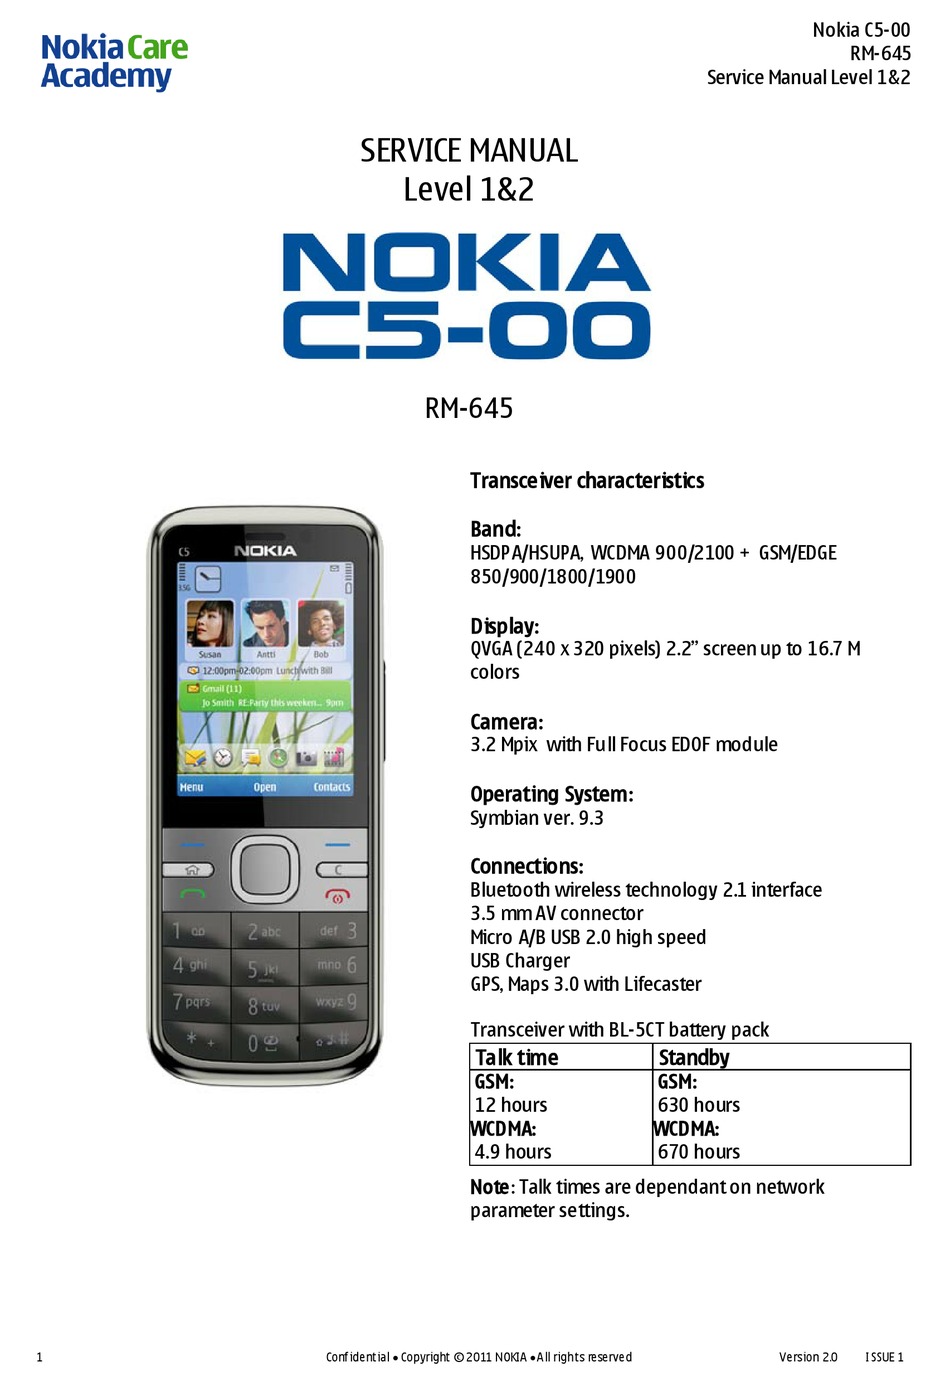 Nokia C5-00 Service Manual Pdf Download | Manualslib